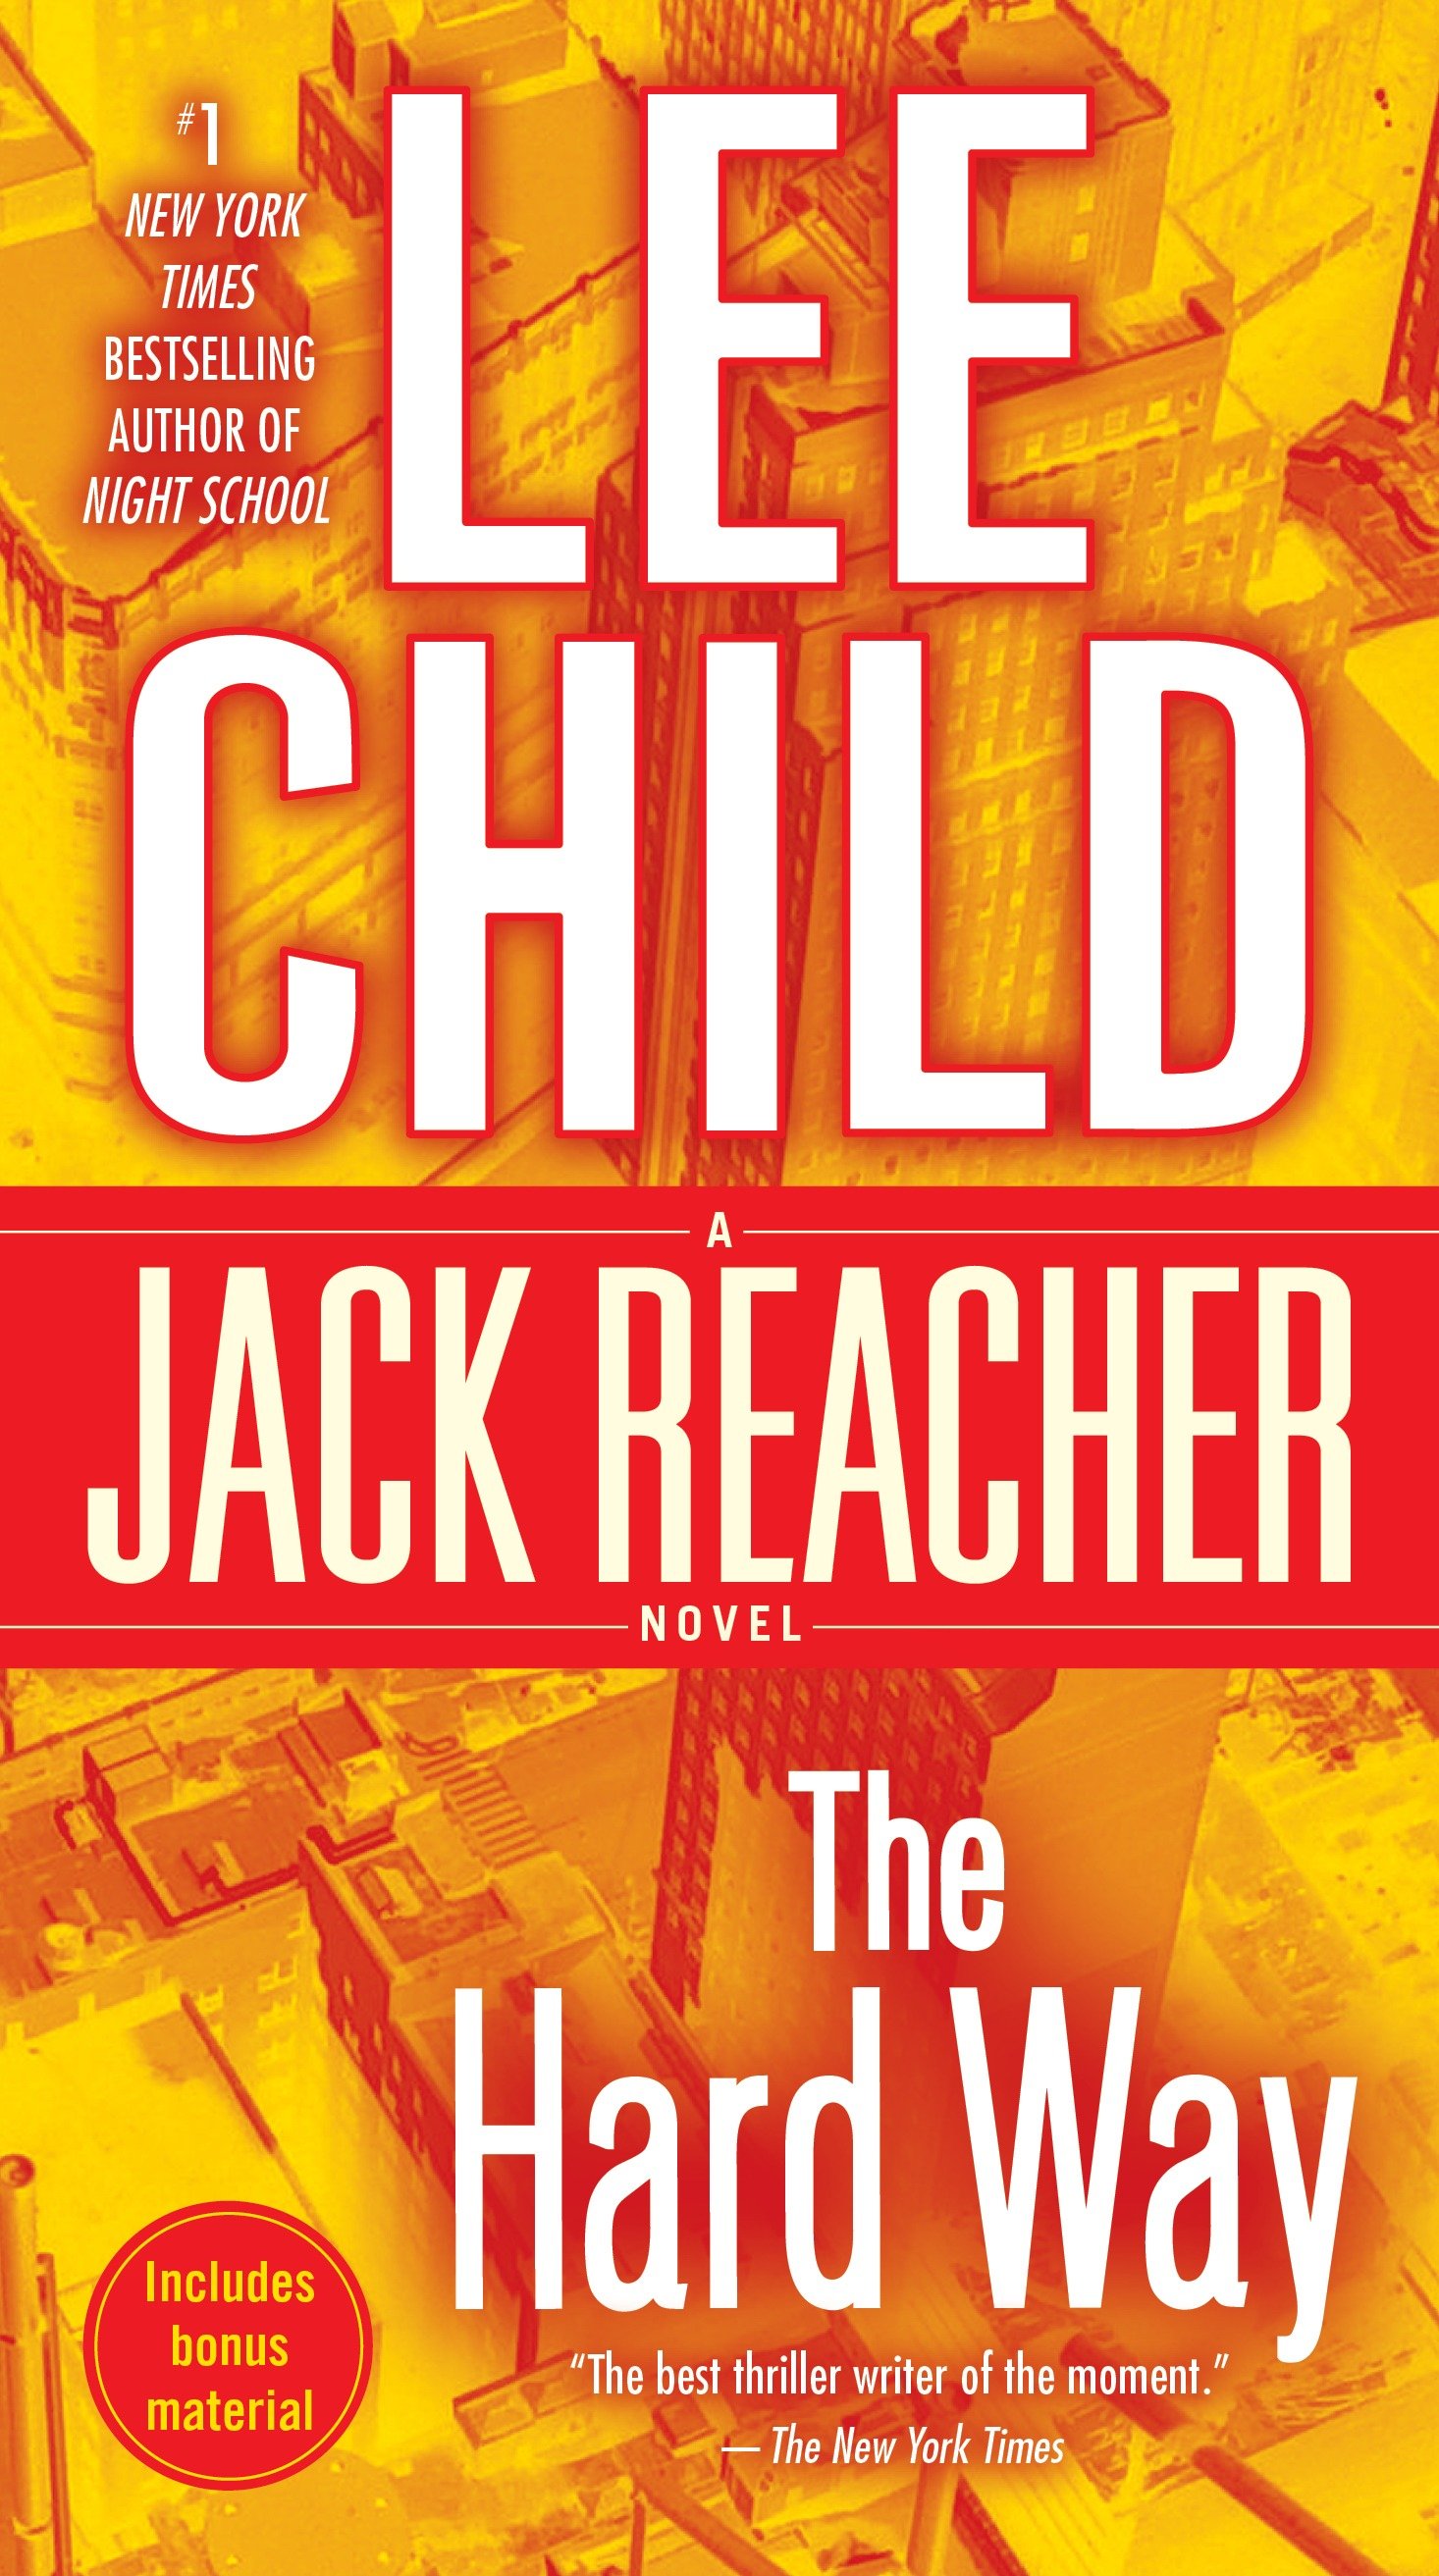 The hard way a Jack Reacher novel cover image